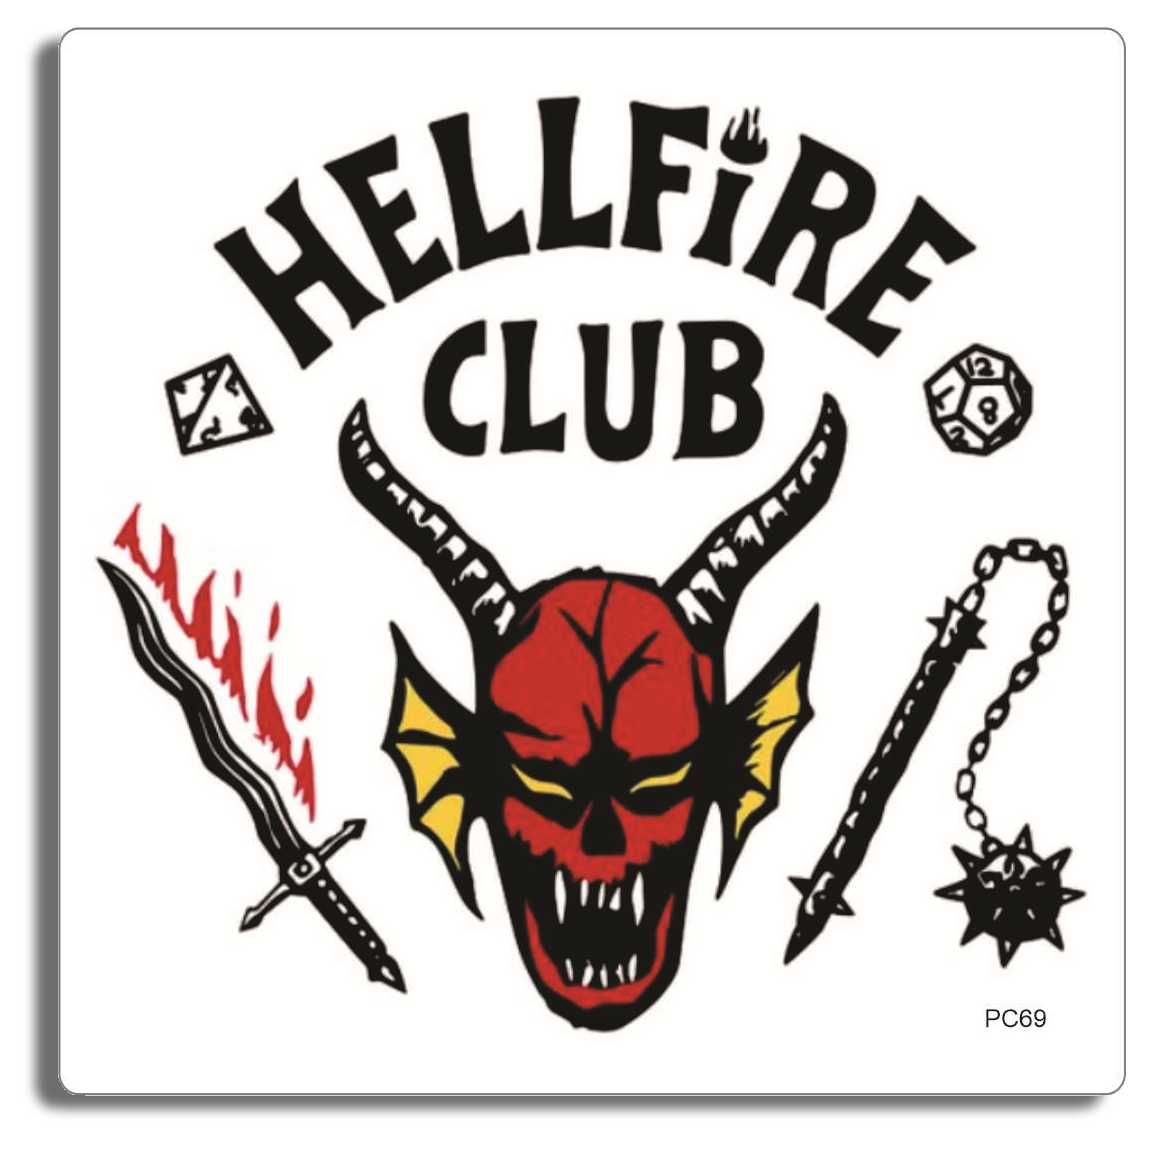 Hellfire Club 3.5" x 3.5" Bumper Sticker--Car Magnet- -  Decal Bumper Sticker-stranger things Bumper Sticker Car Magnet Hellfire Club-  Decal for cars